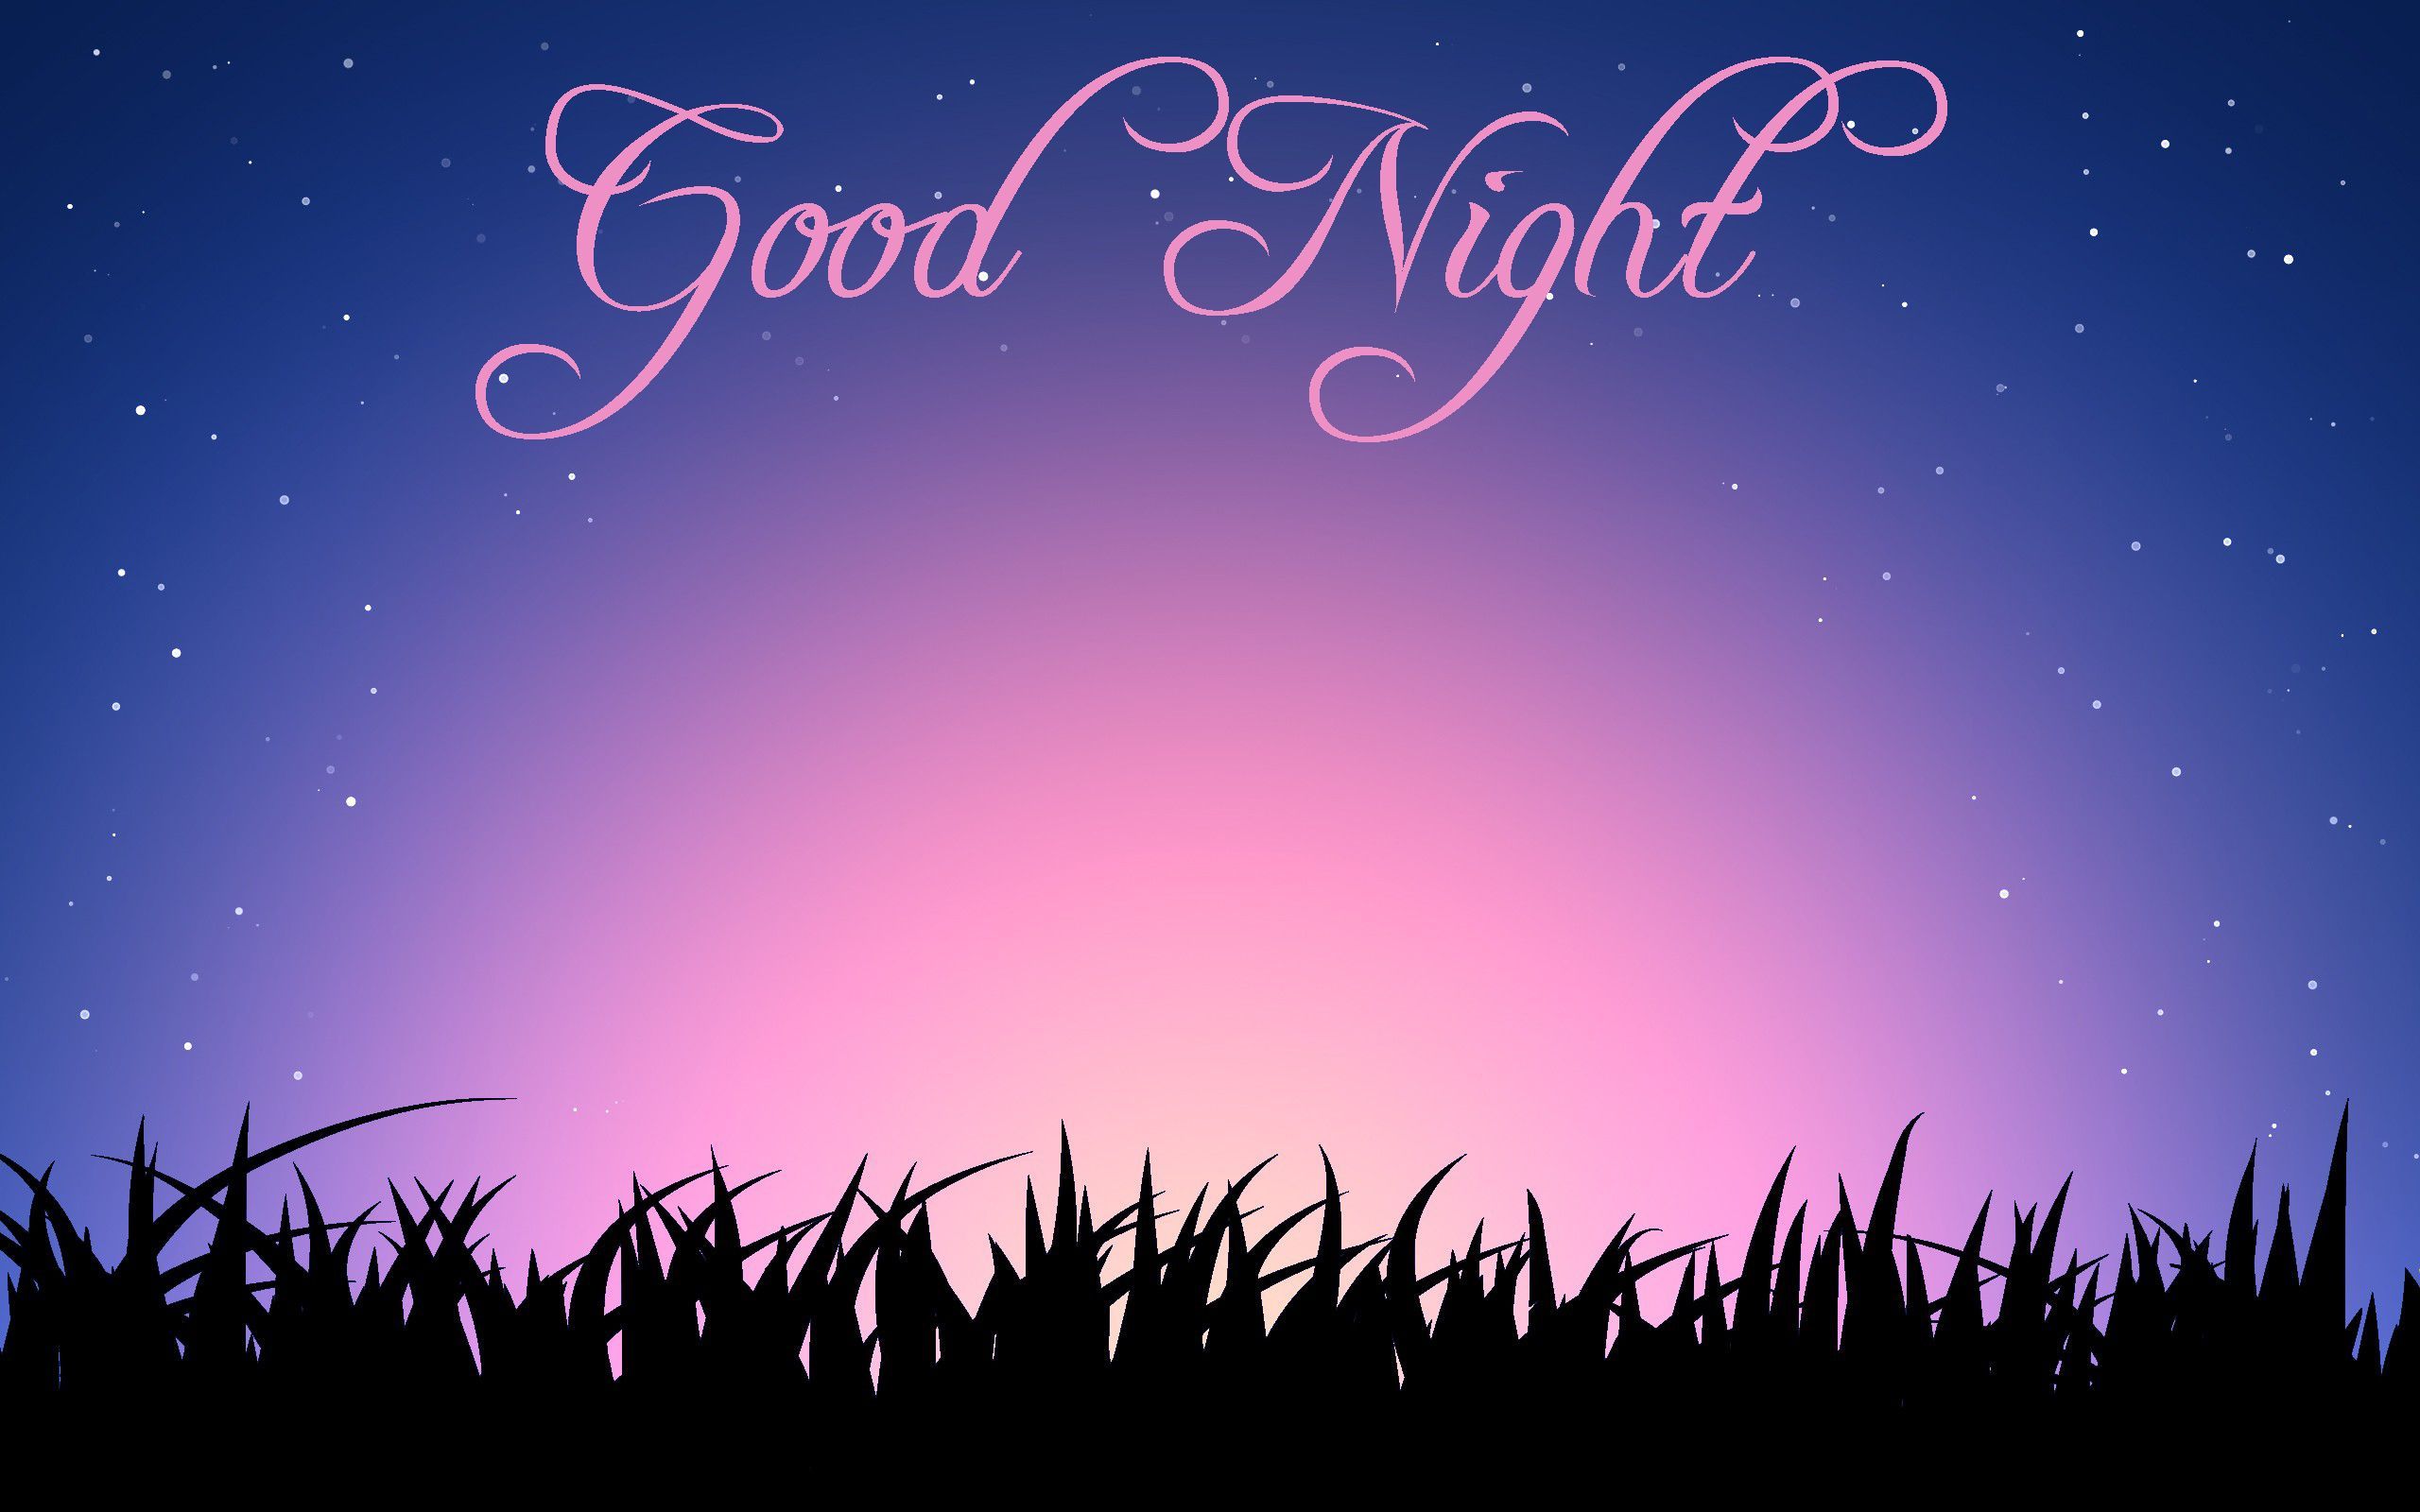 Good Night Wallpaper. Romantic good night